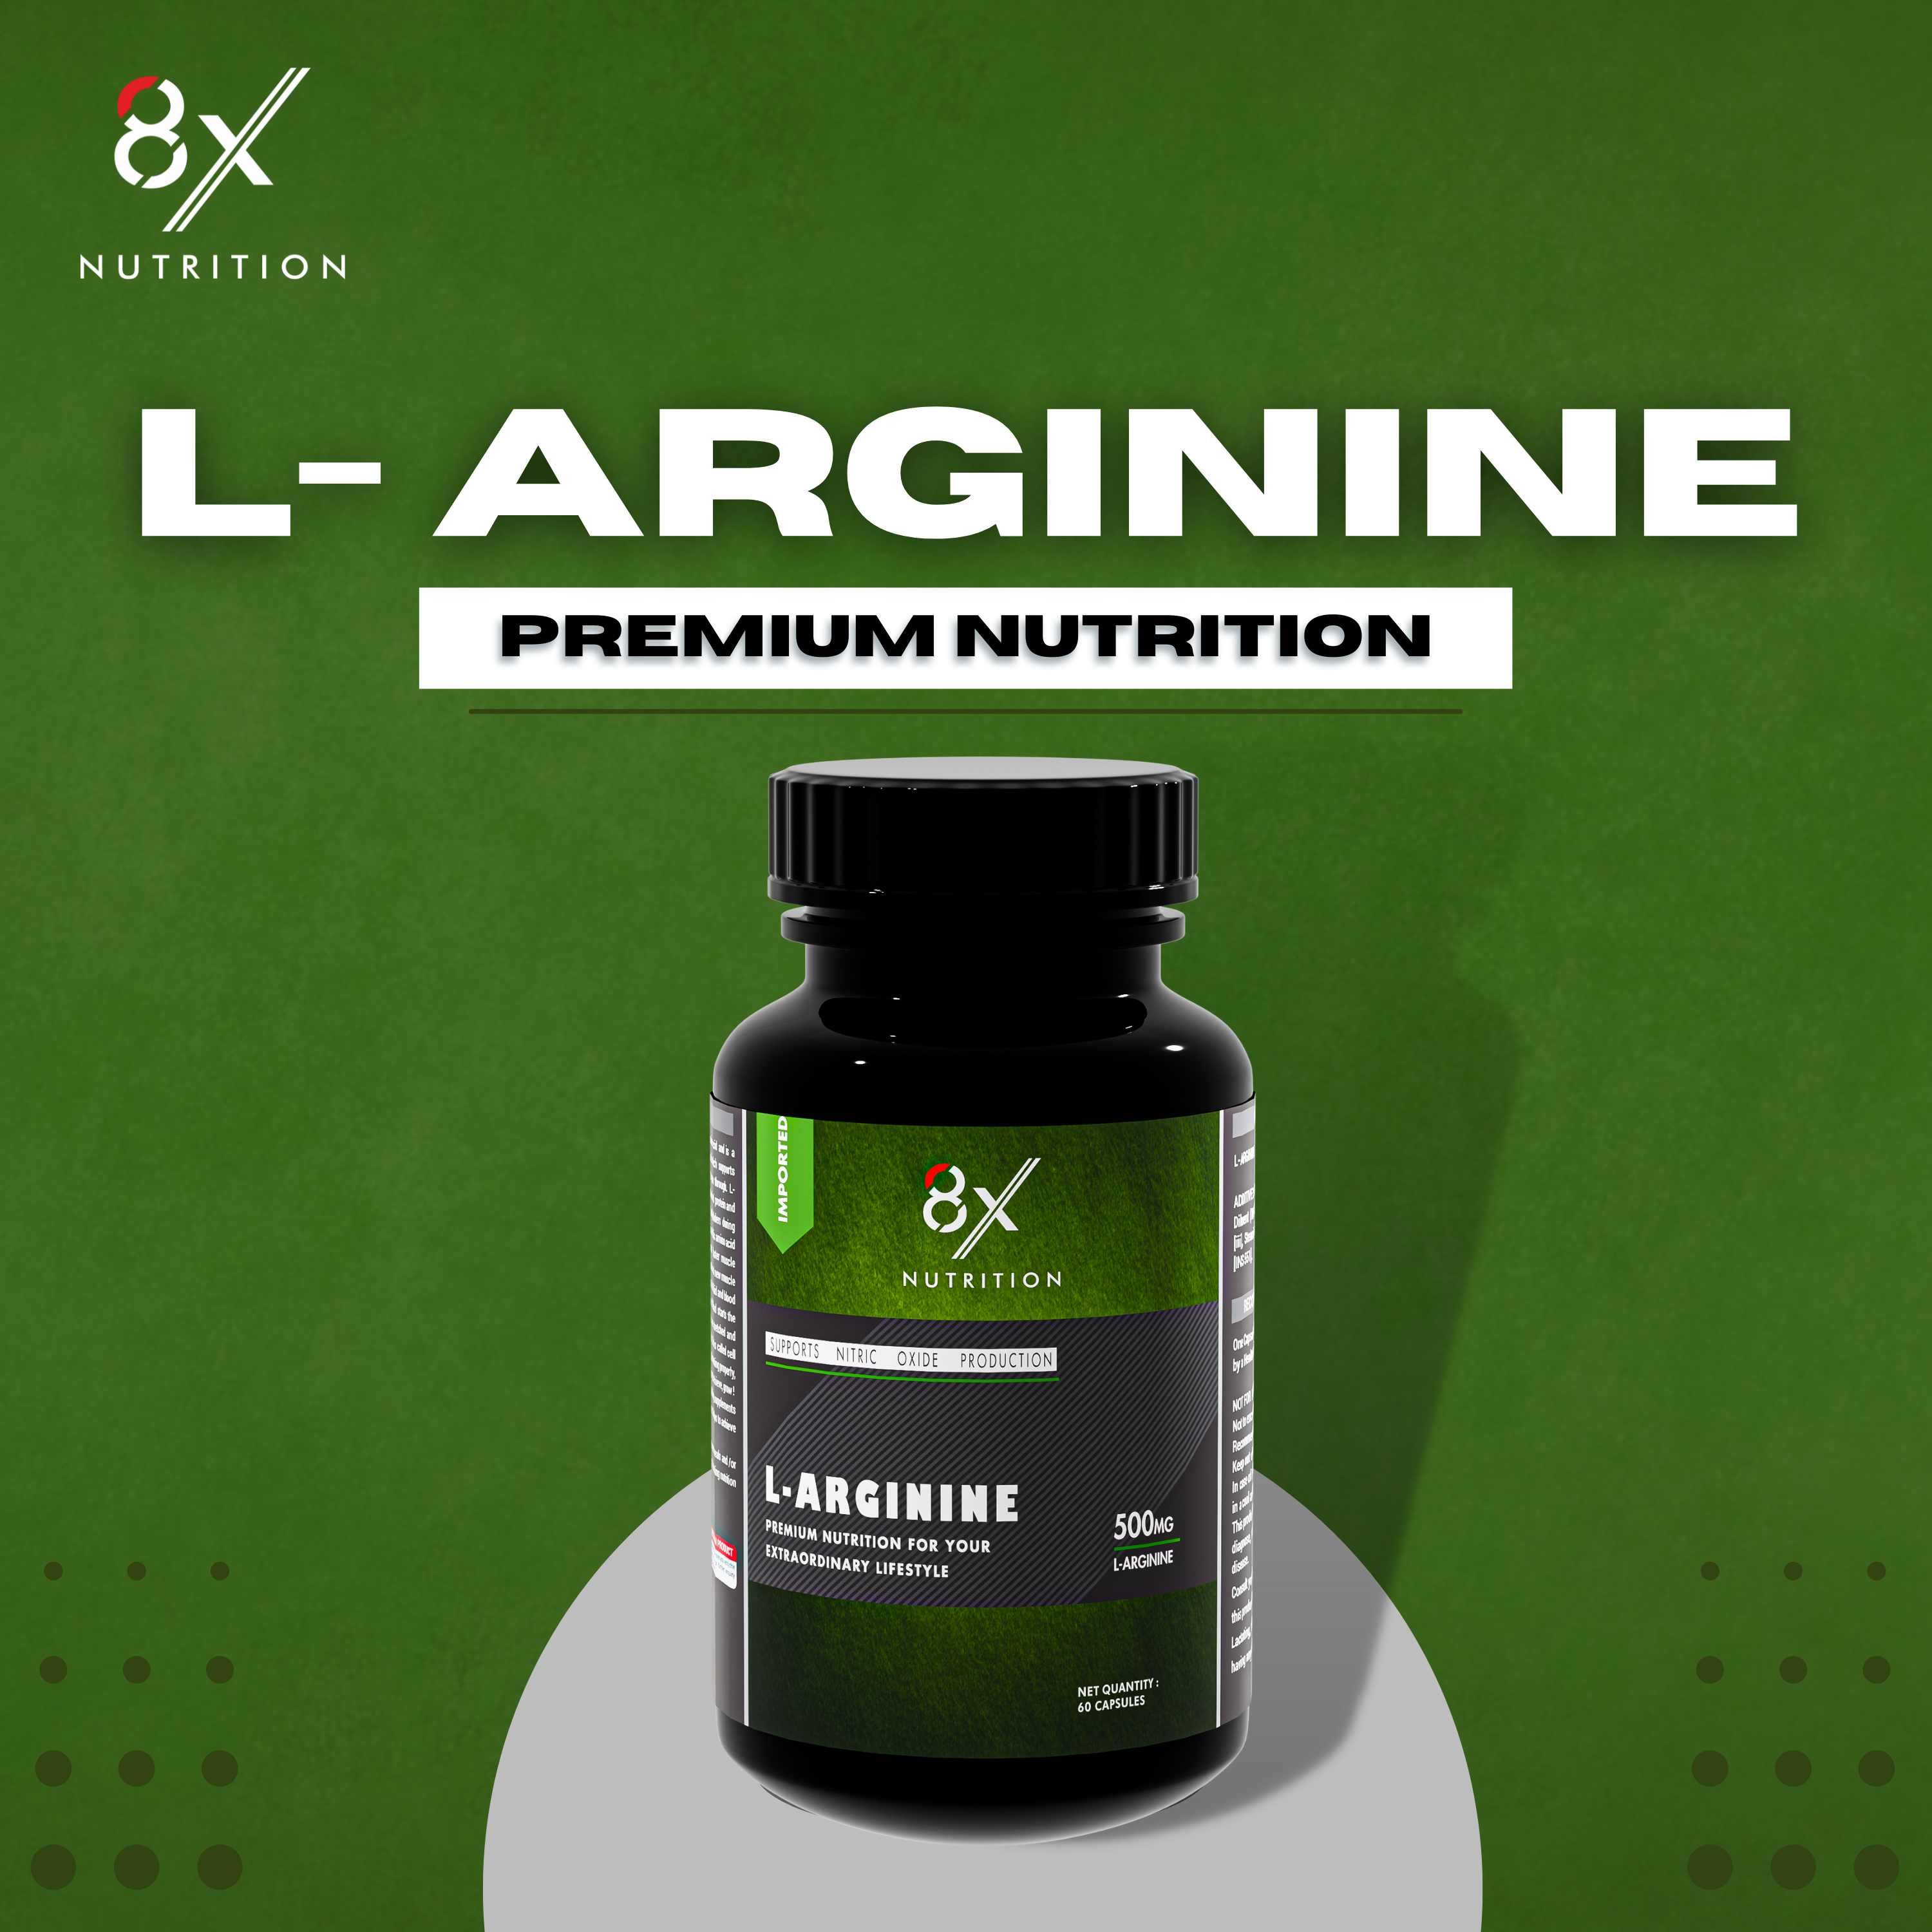 8X Nutrition L-Arginine